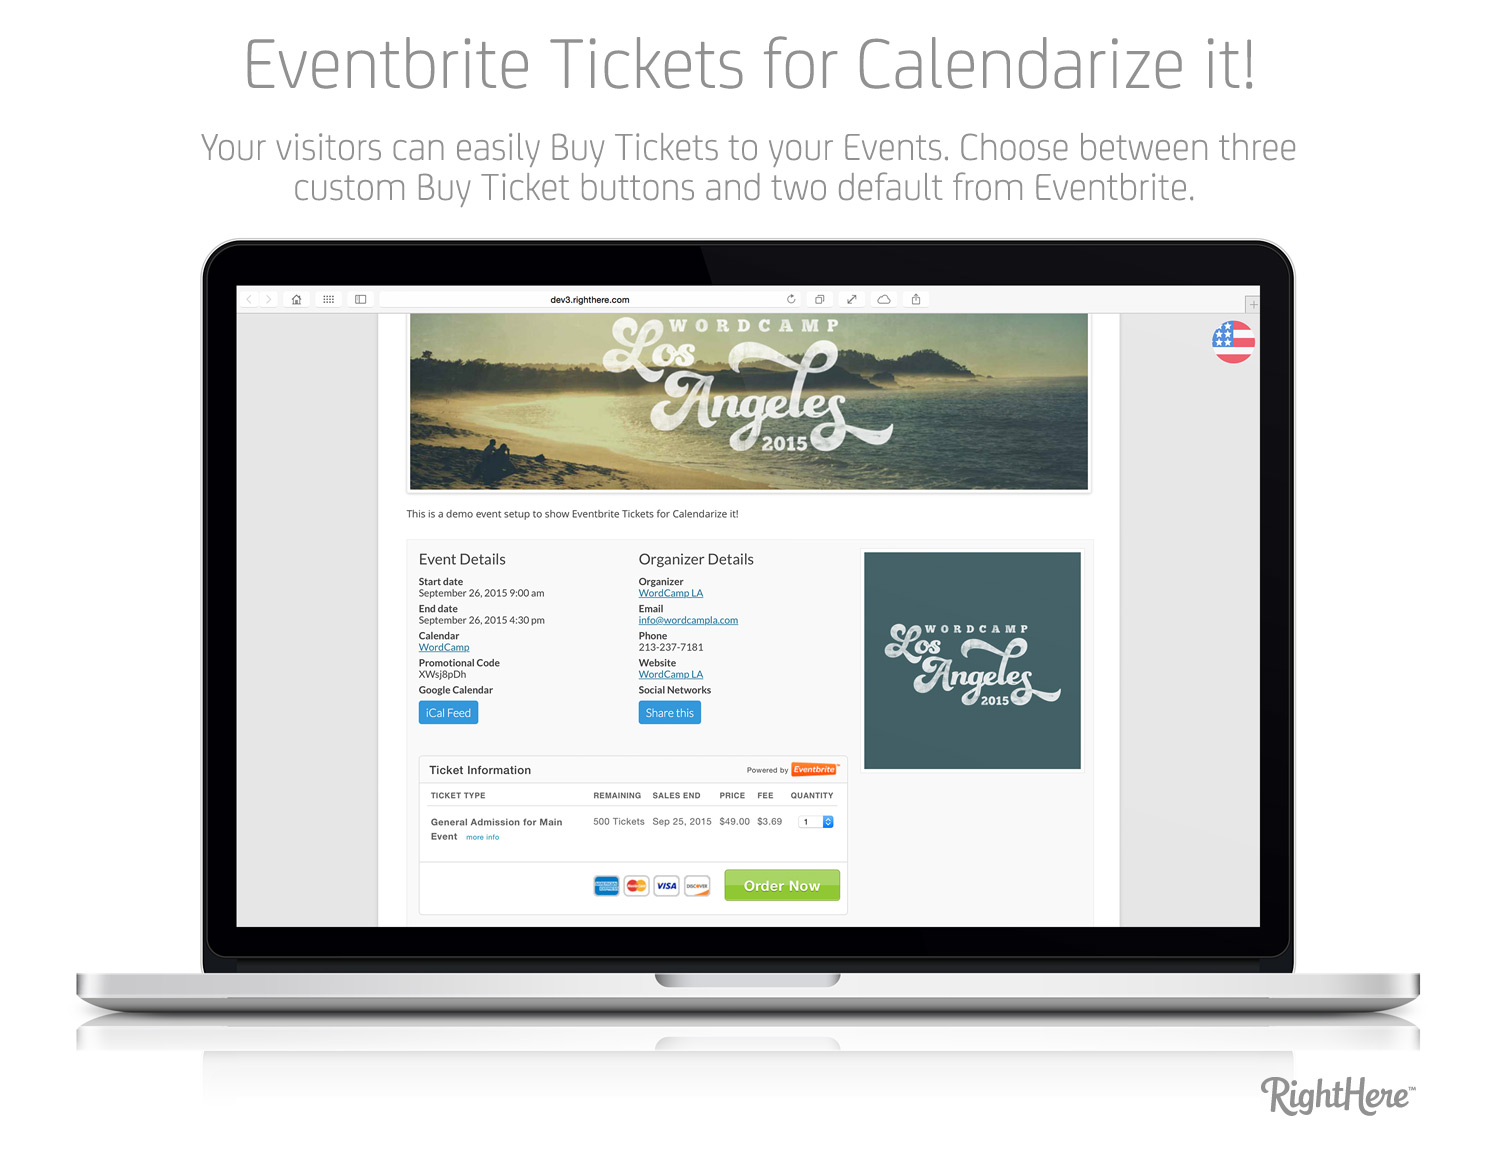 Eventbrite Tickets for Calendarize it! - Event Details Page